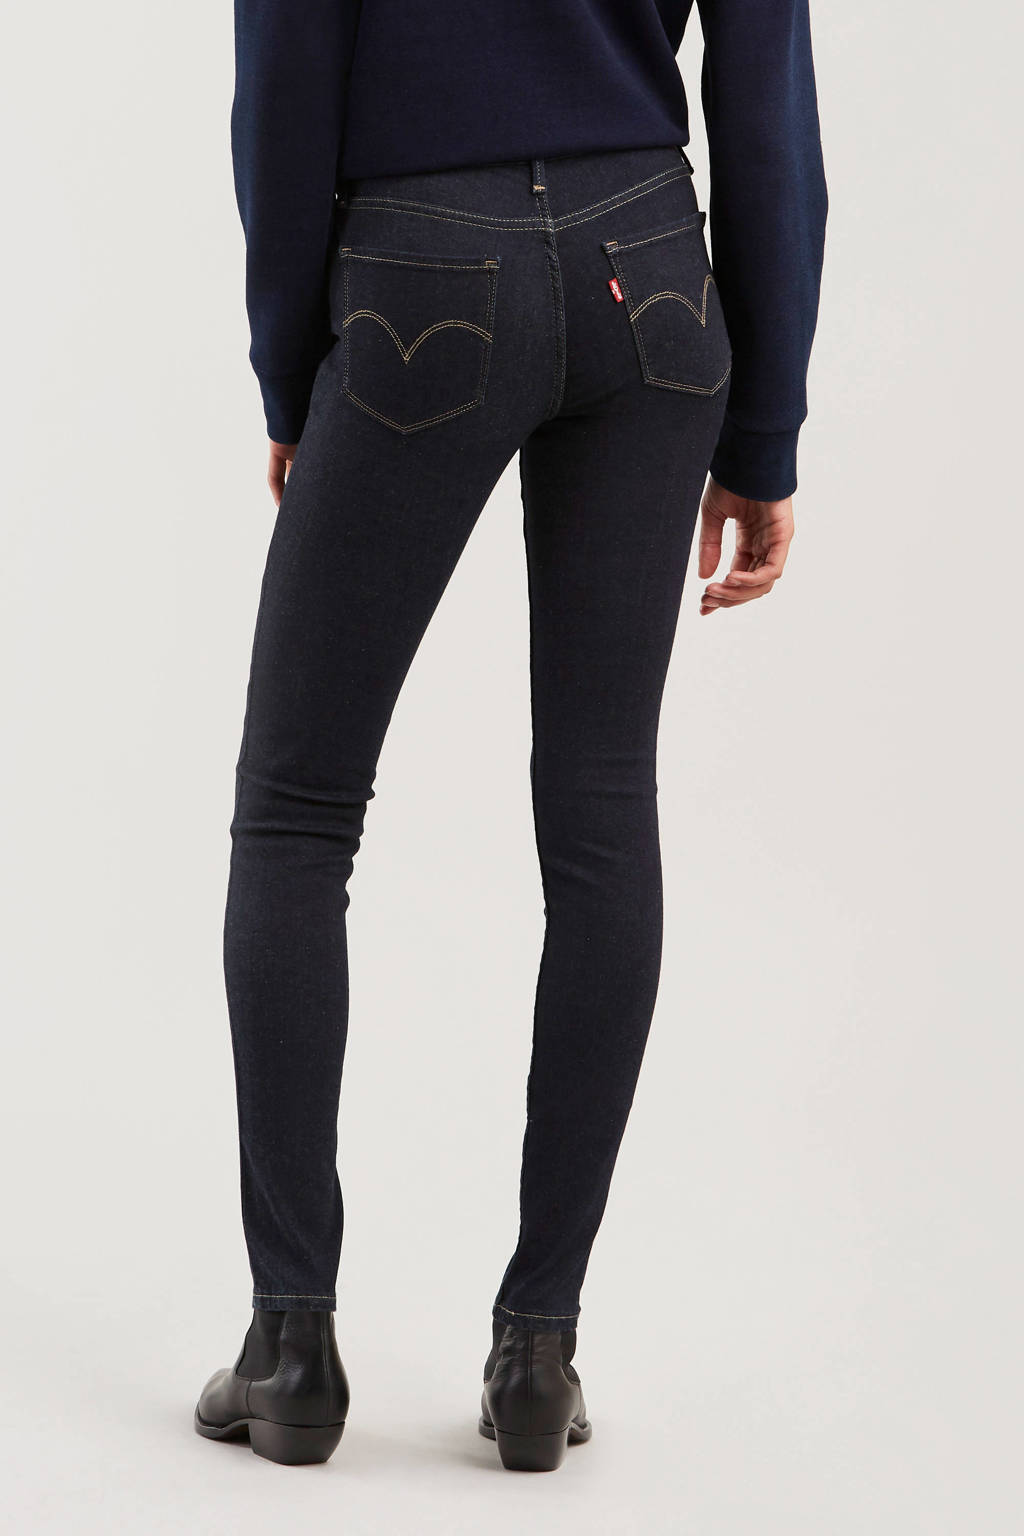 dividend capsule maniac Levi's 710 Innovation super skinny jeans celestial rinse | wehkamp